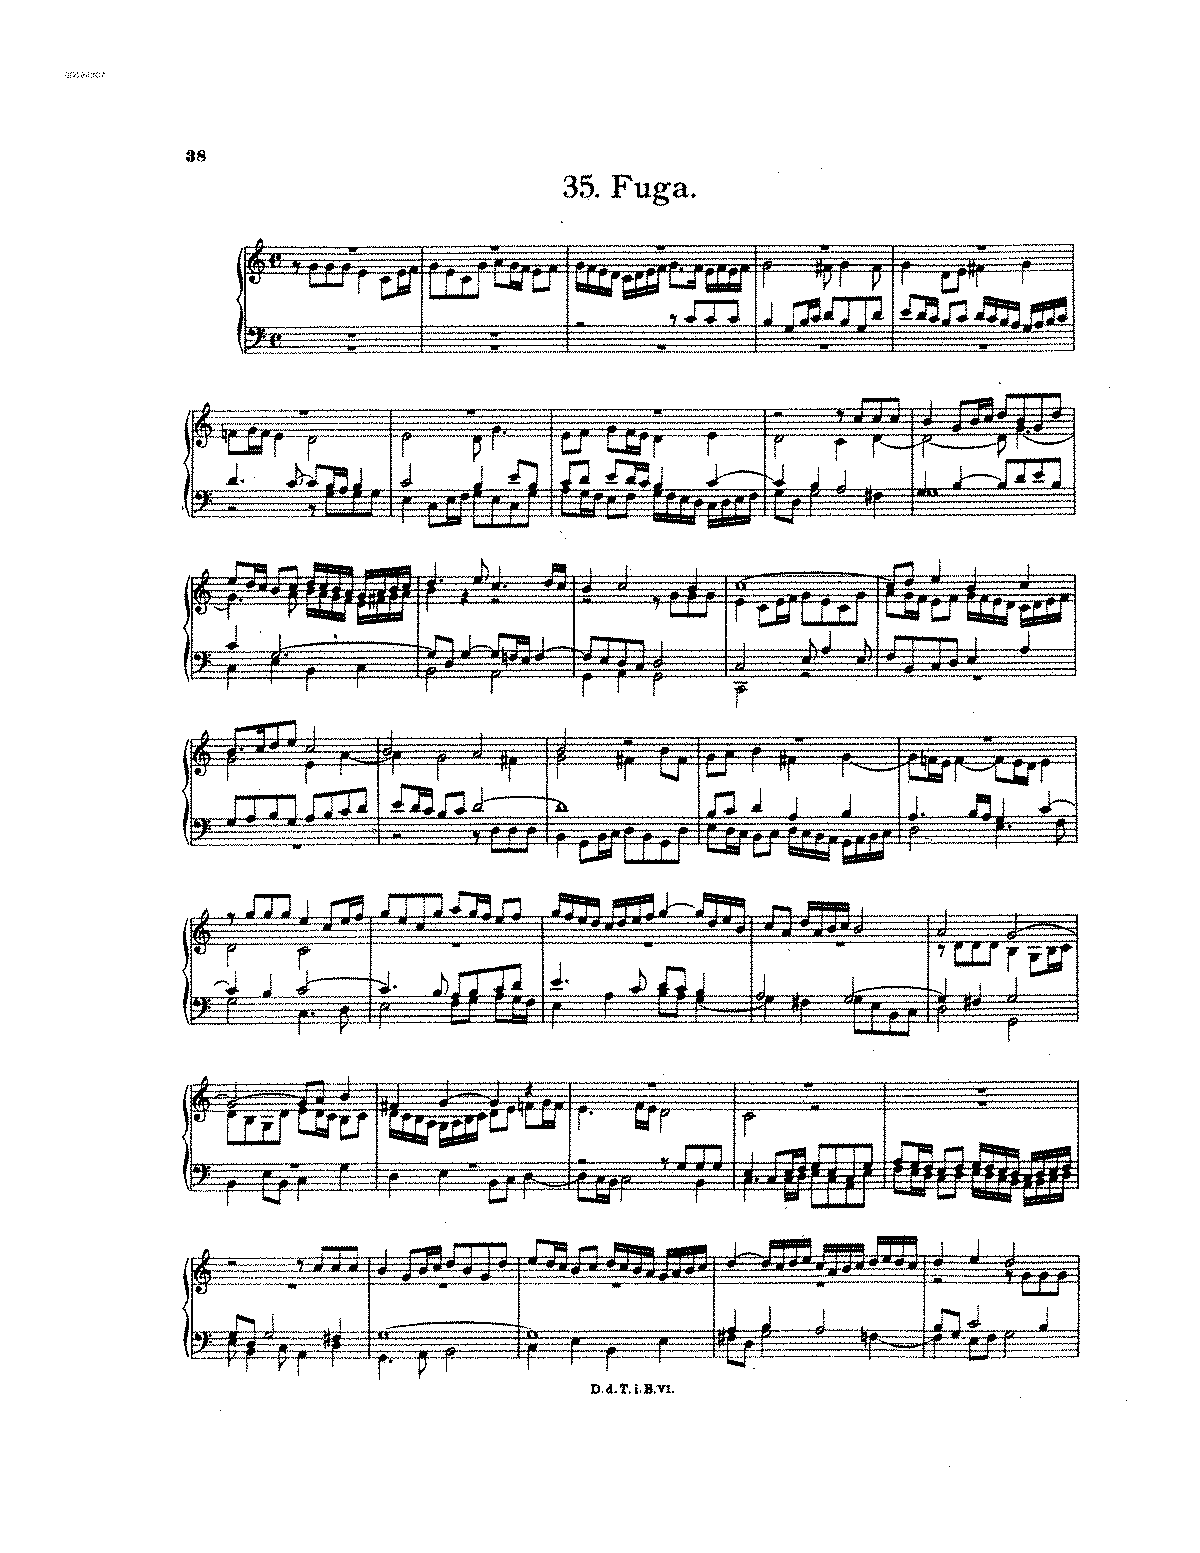 Fugue in C major, P.150 (Pachelbel, Johann) - IMSLP